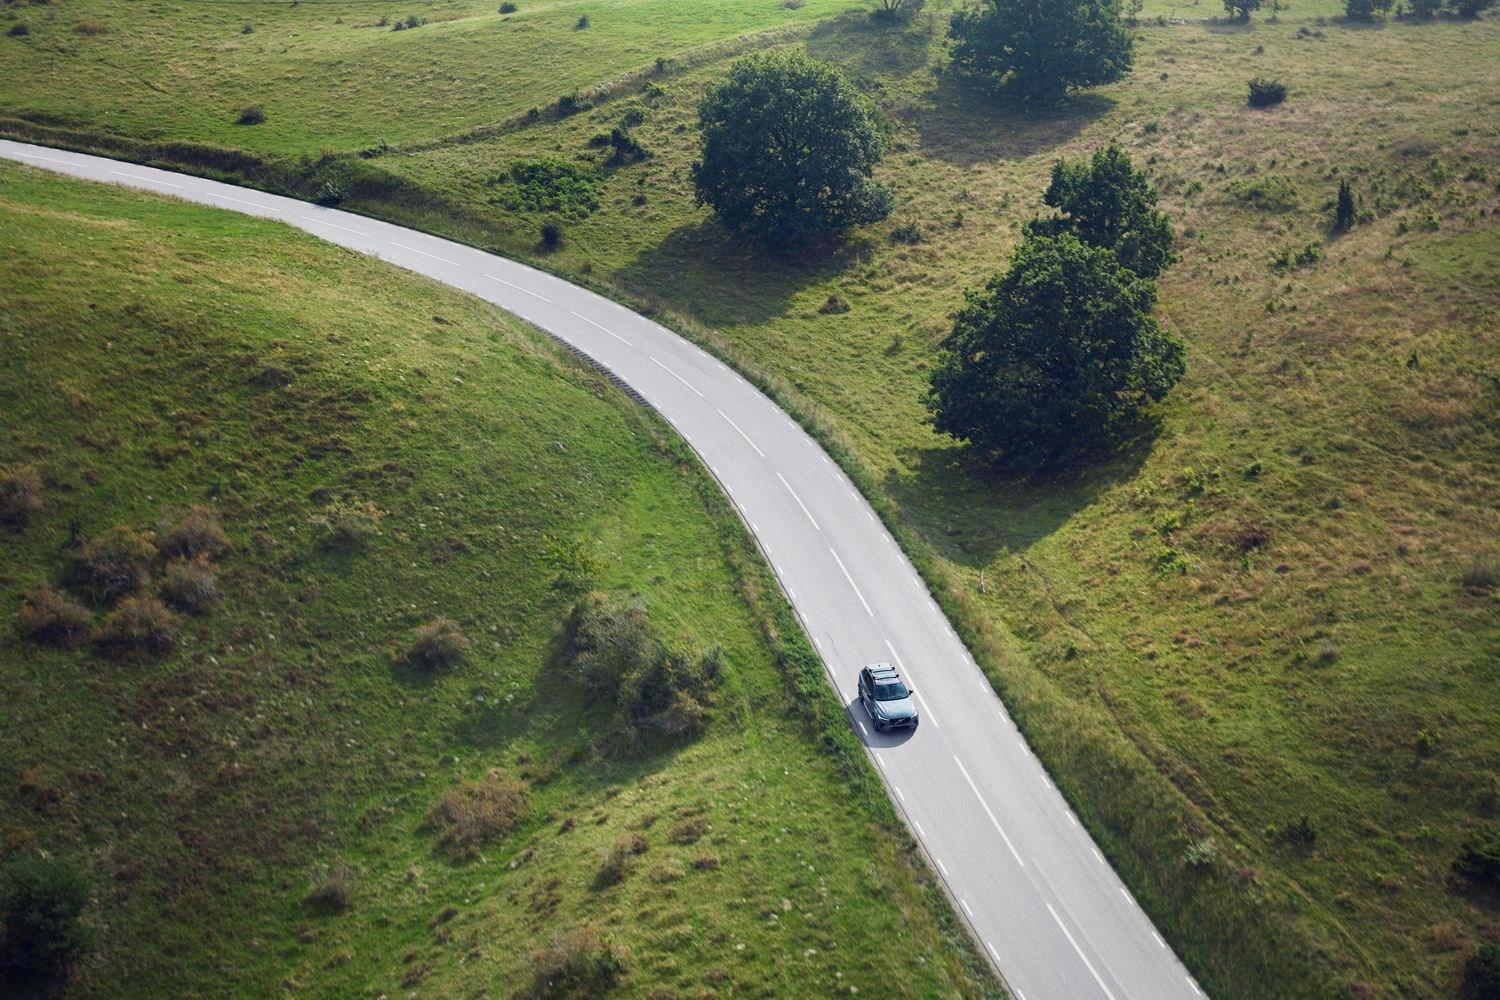 New grey Volvo car drives along winding countryside road